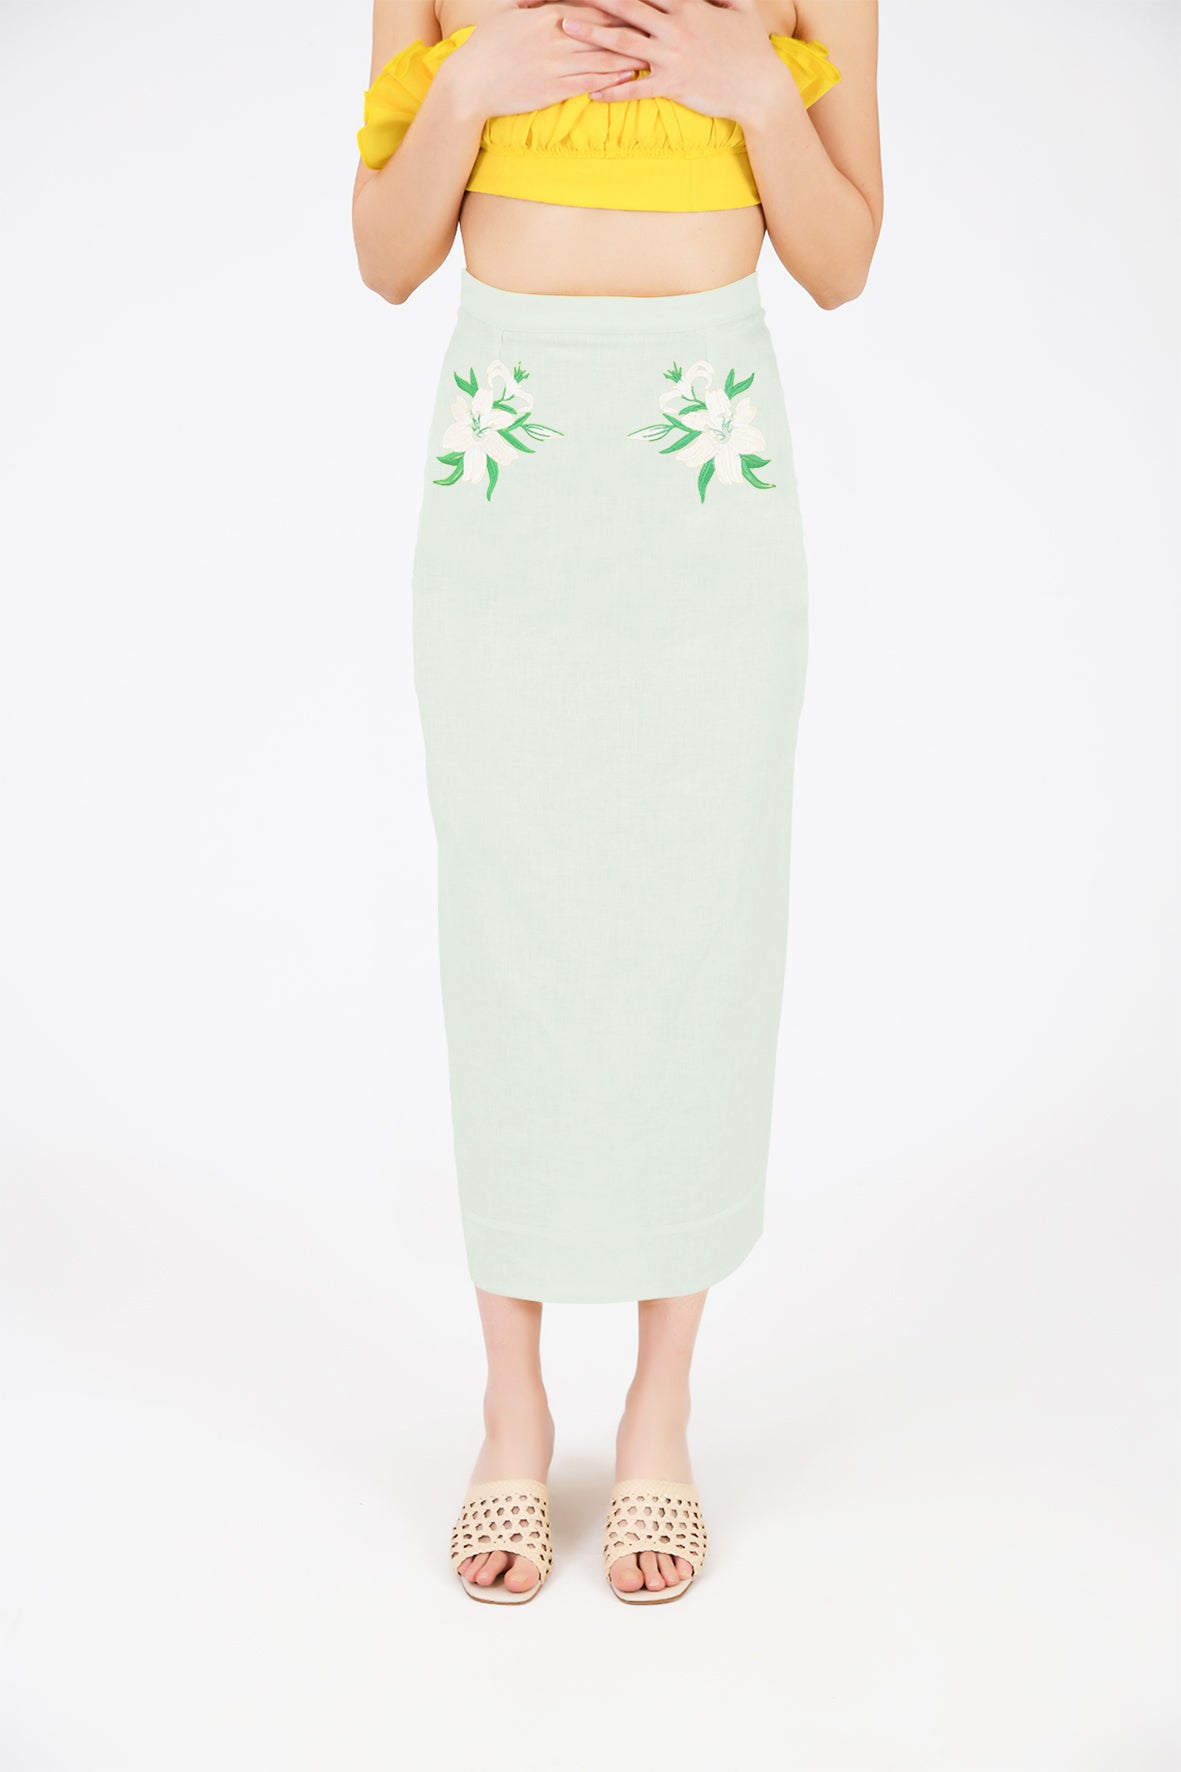 Arina Skirt (Wanga Collection) in Mint Green